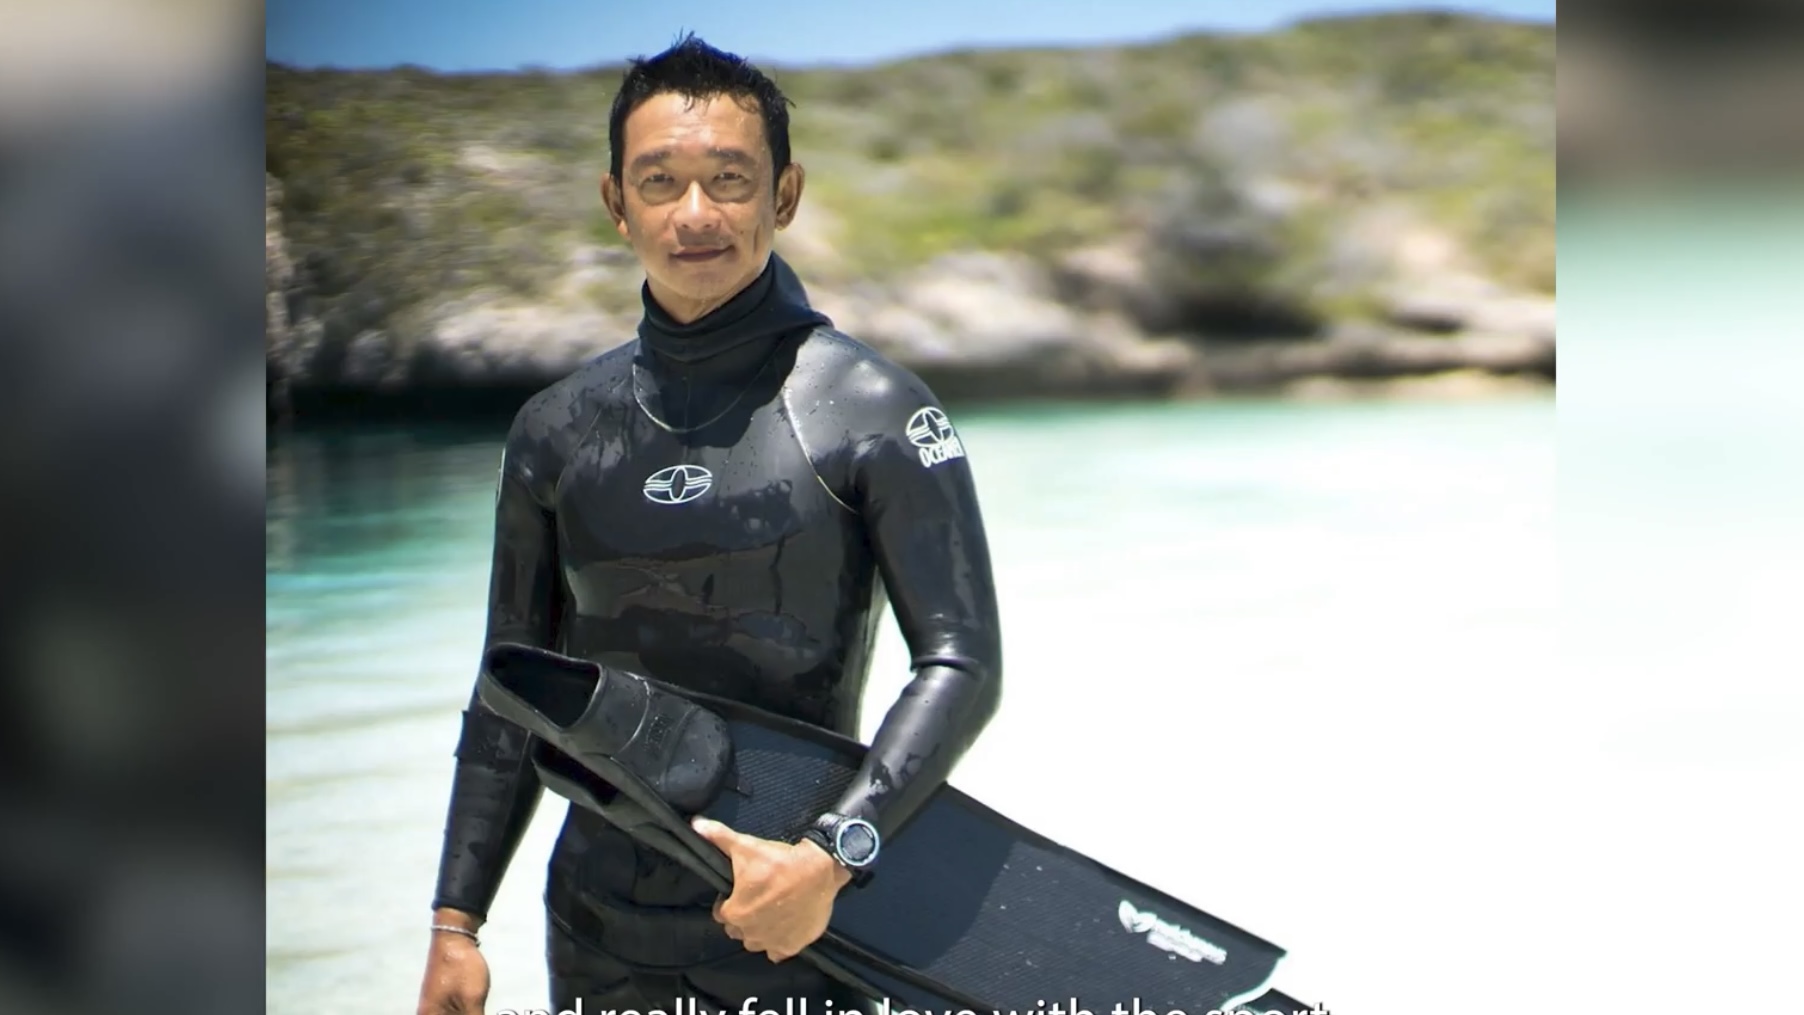 Ep 13 - Chris Kim: Free Diving